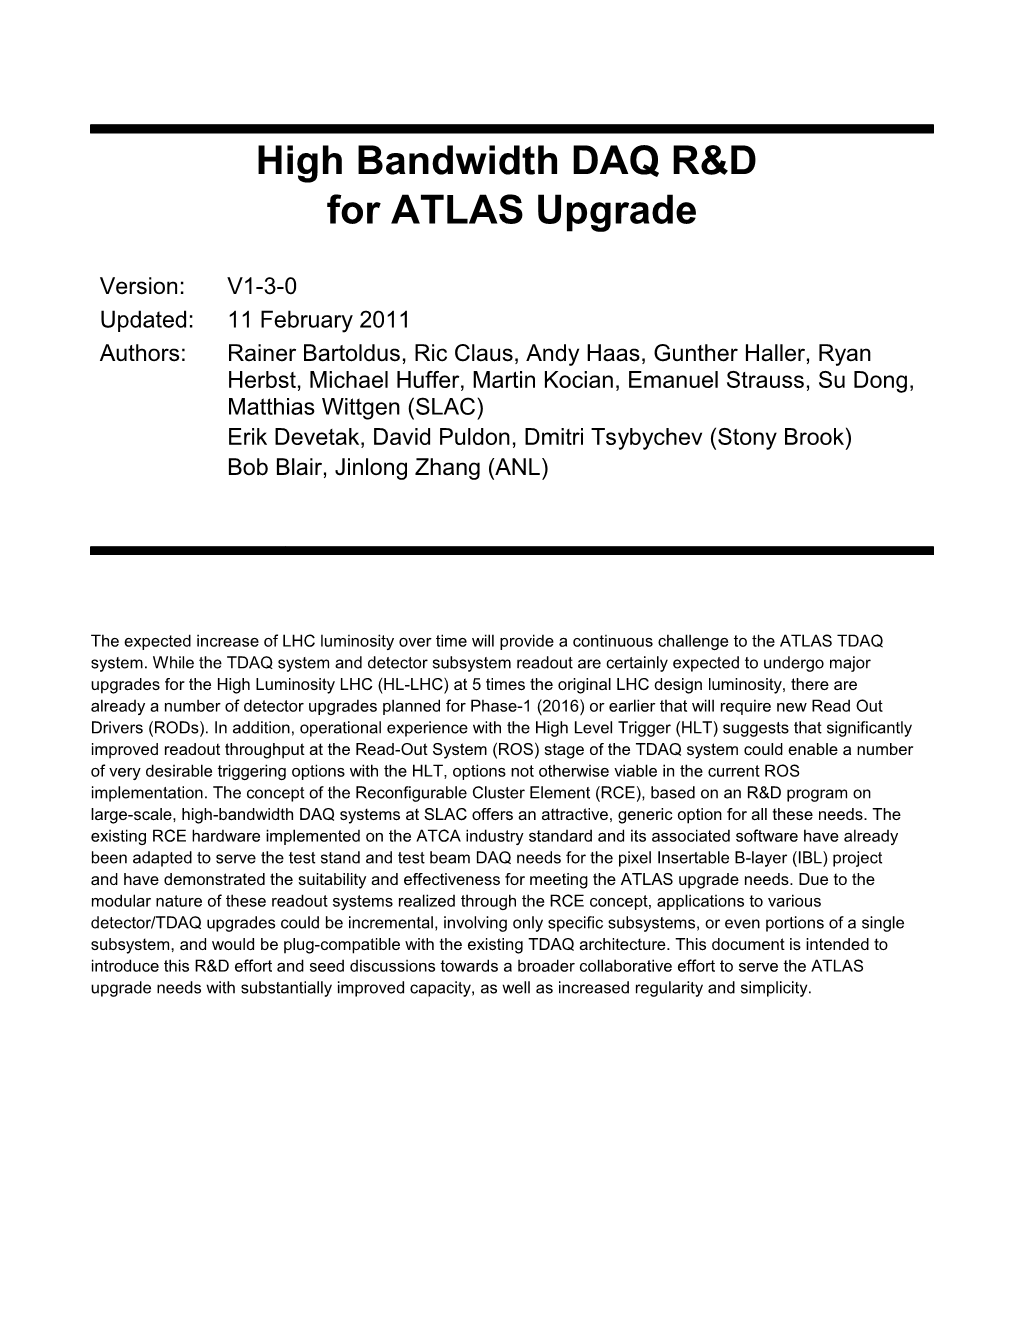 ATLAS TDAQ Upgrade Proposal